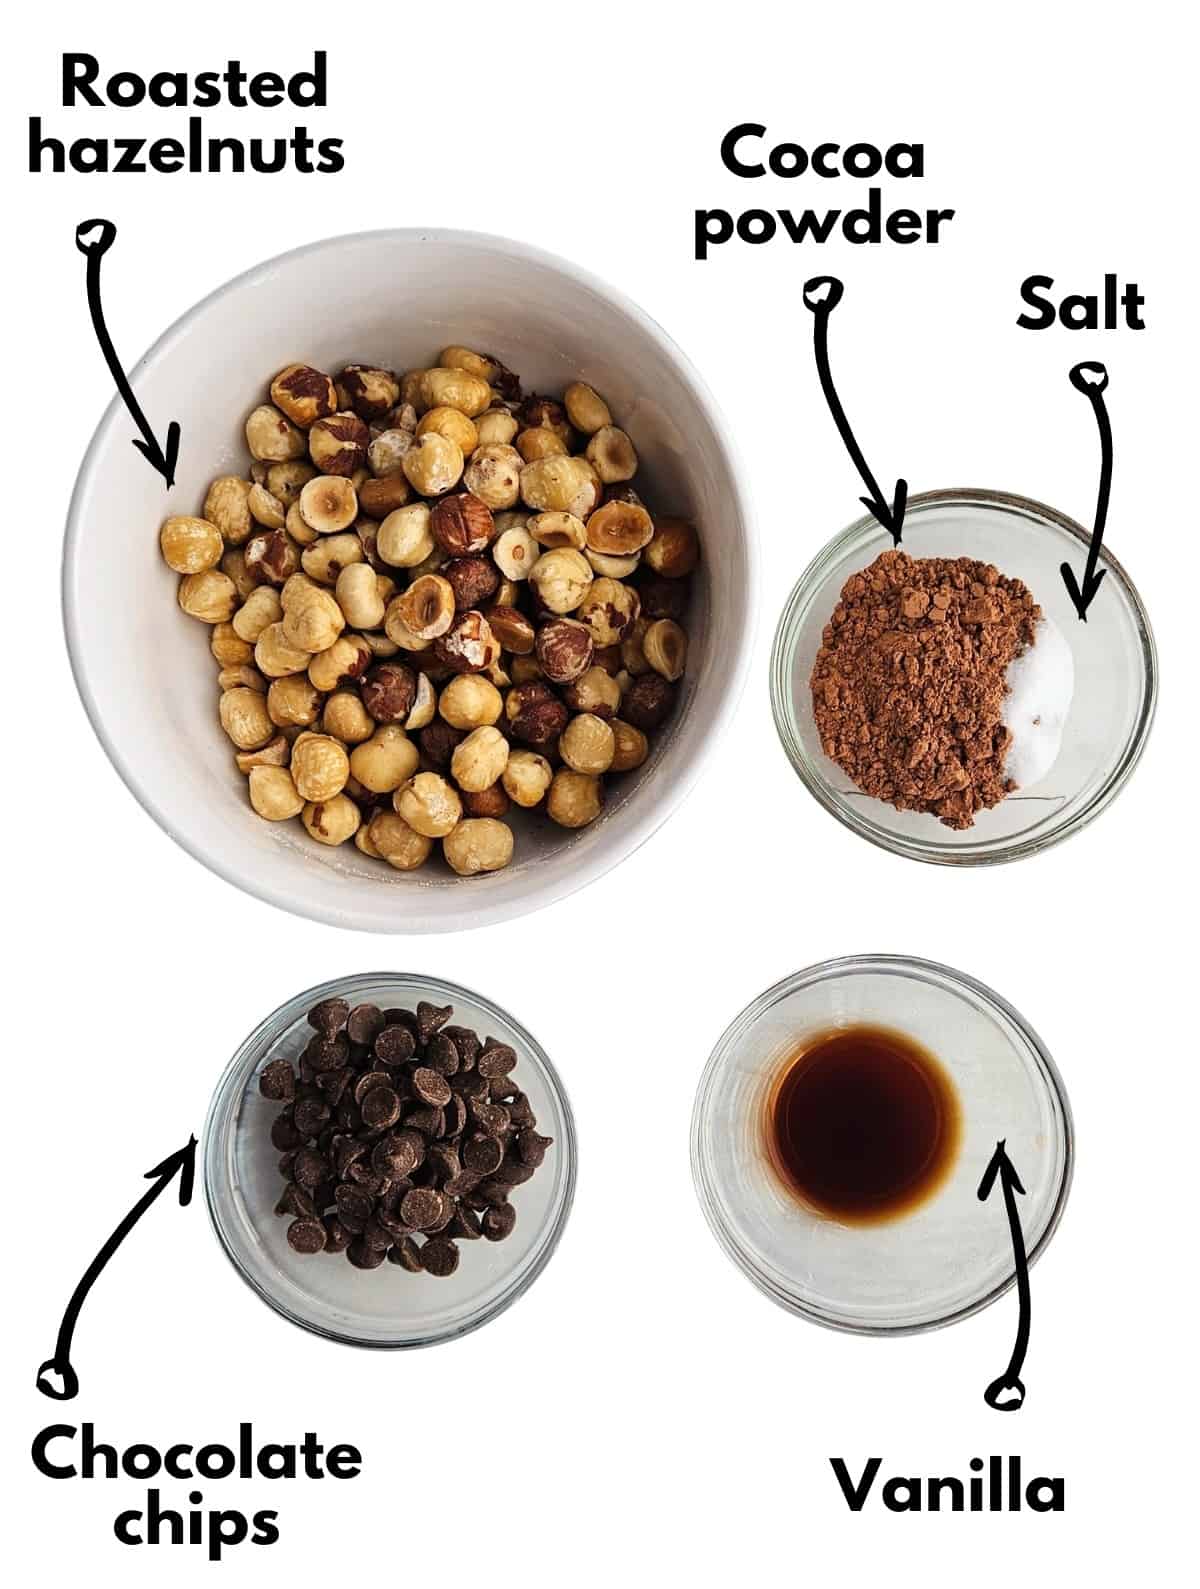 Hazelnuts, cocoa powder, salt, chocolate chips, and vanilla.